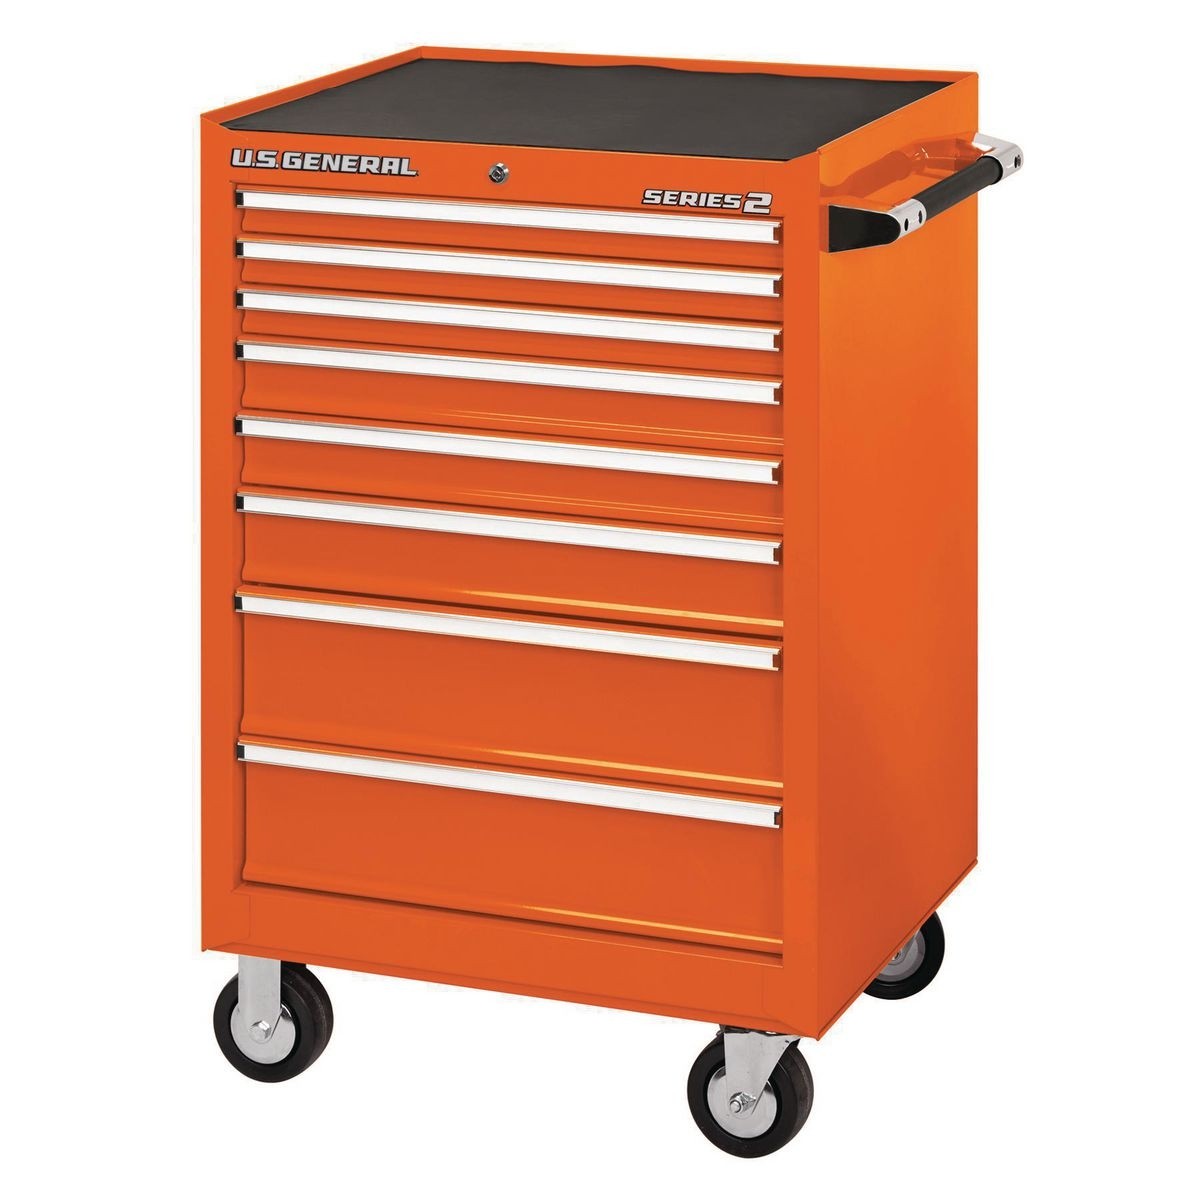 U.S. GENERAL 26 In. X 22 In. Single Bank Roller Cabinet – Orange – Item 56235 / 56105